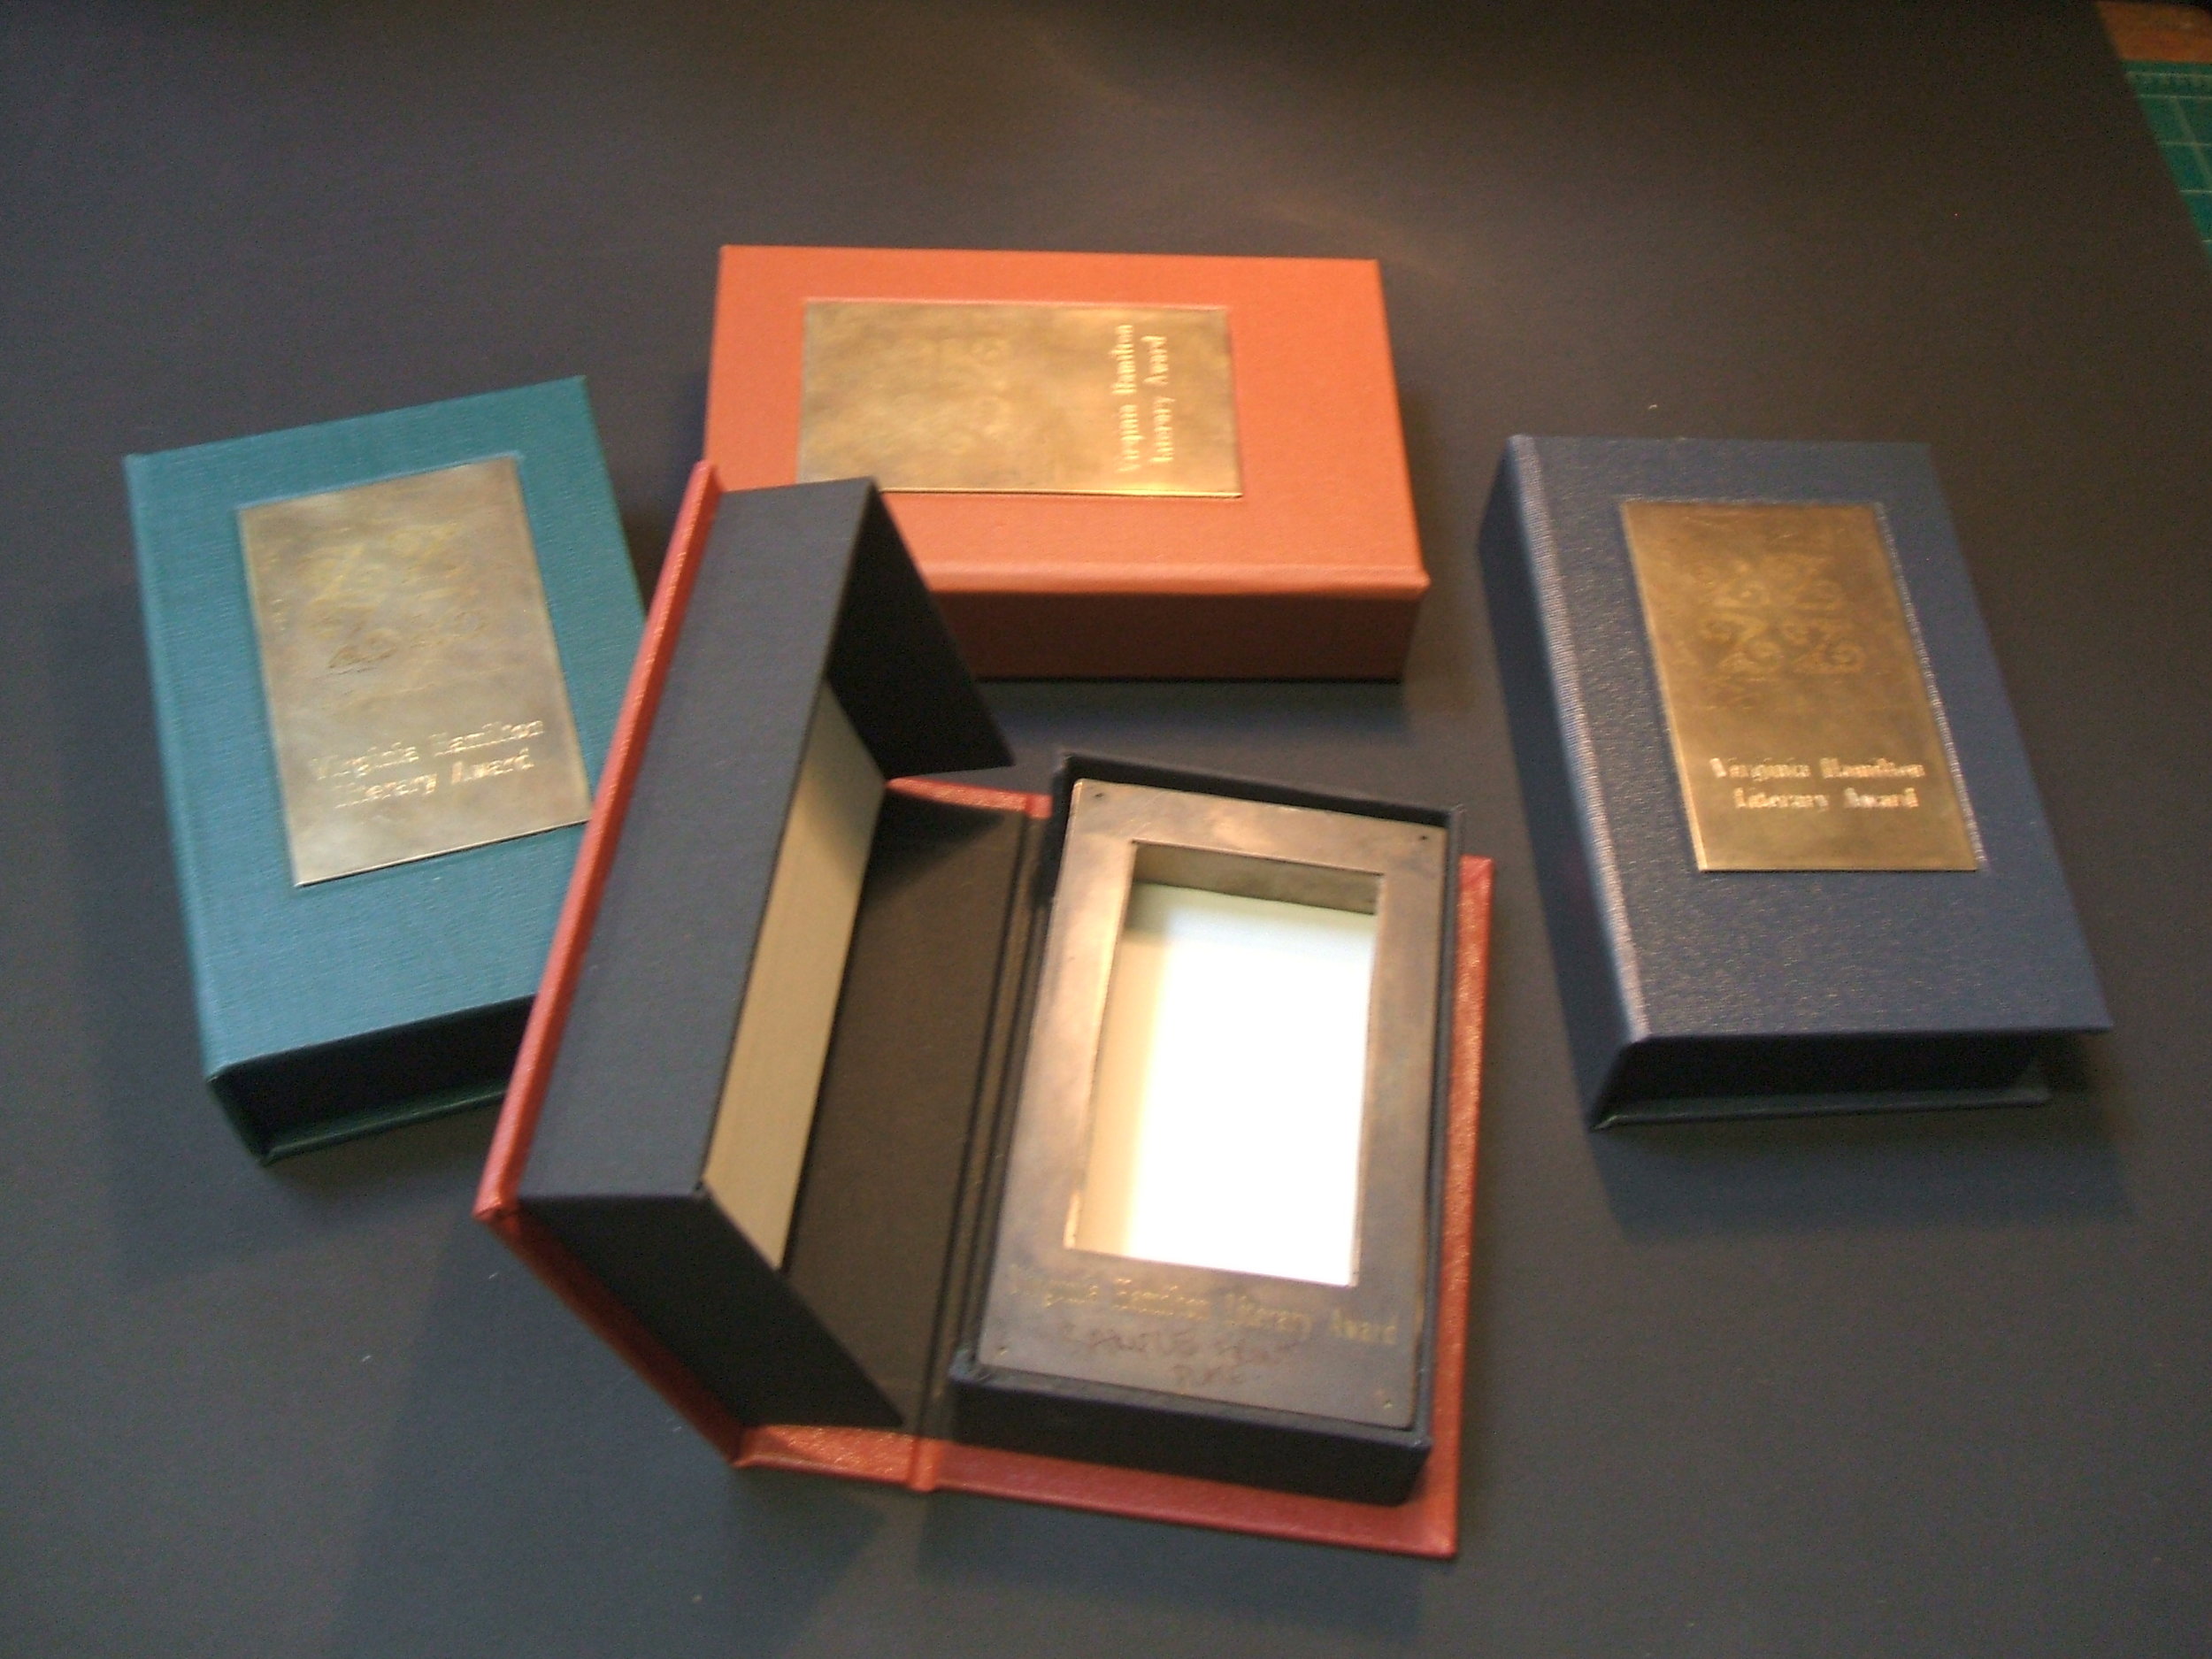 Virginia Hamilton Literary Awards boxes.JPG